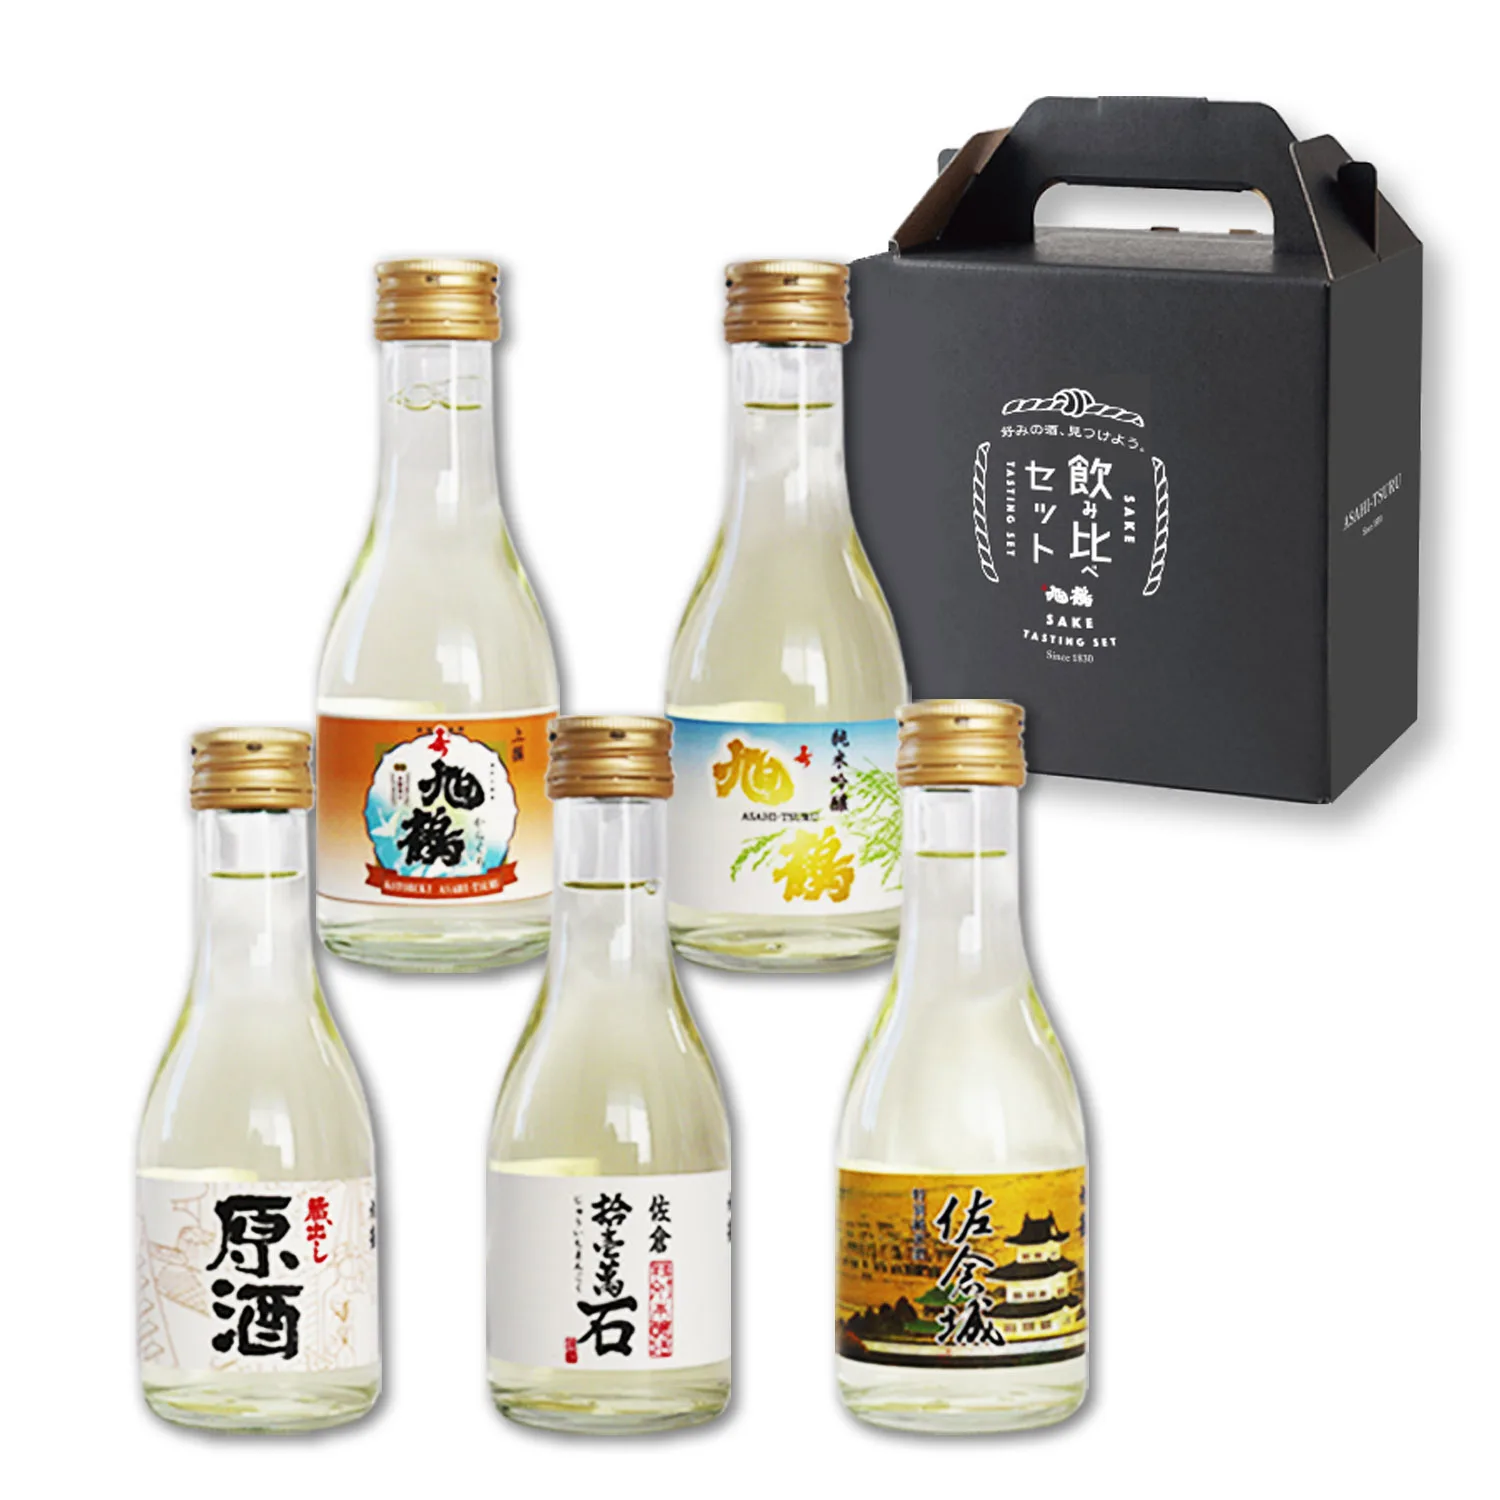 Enjoy a variety of flavors alcoholic beverages and drinks japan sake set